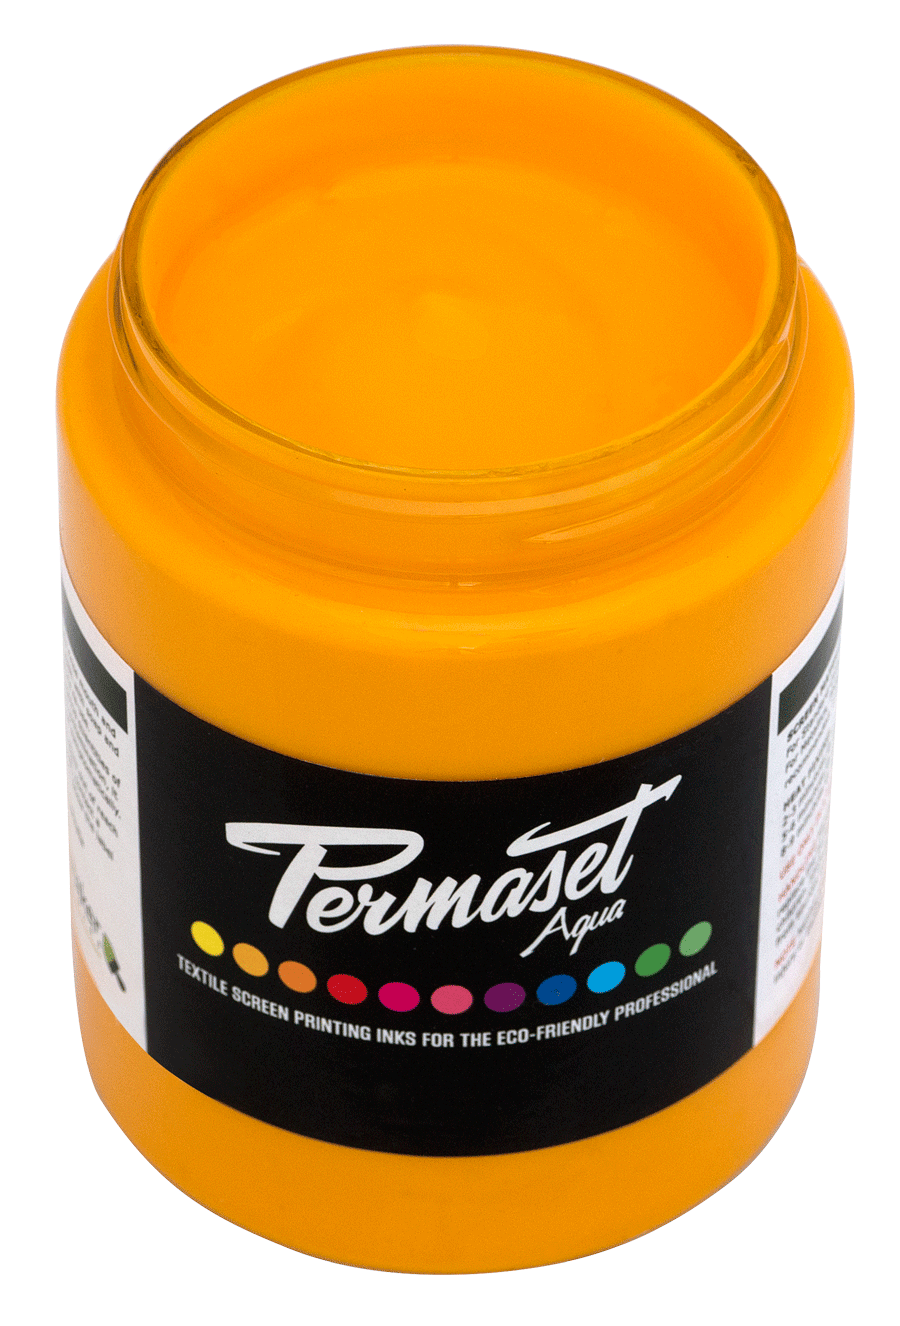 Permaset Aqua Ink - Yellow R